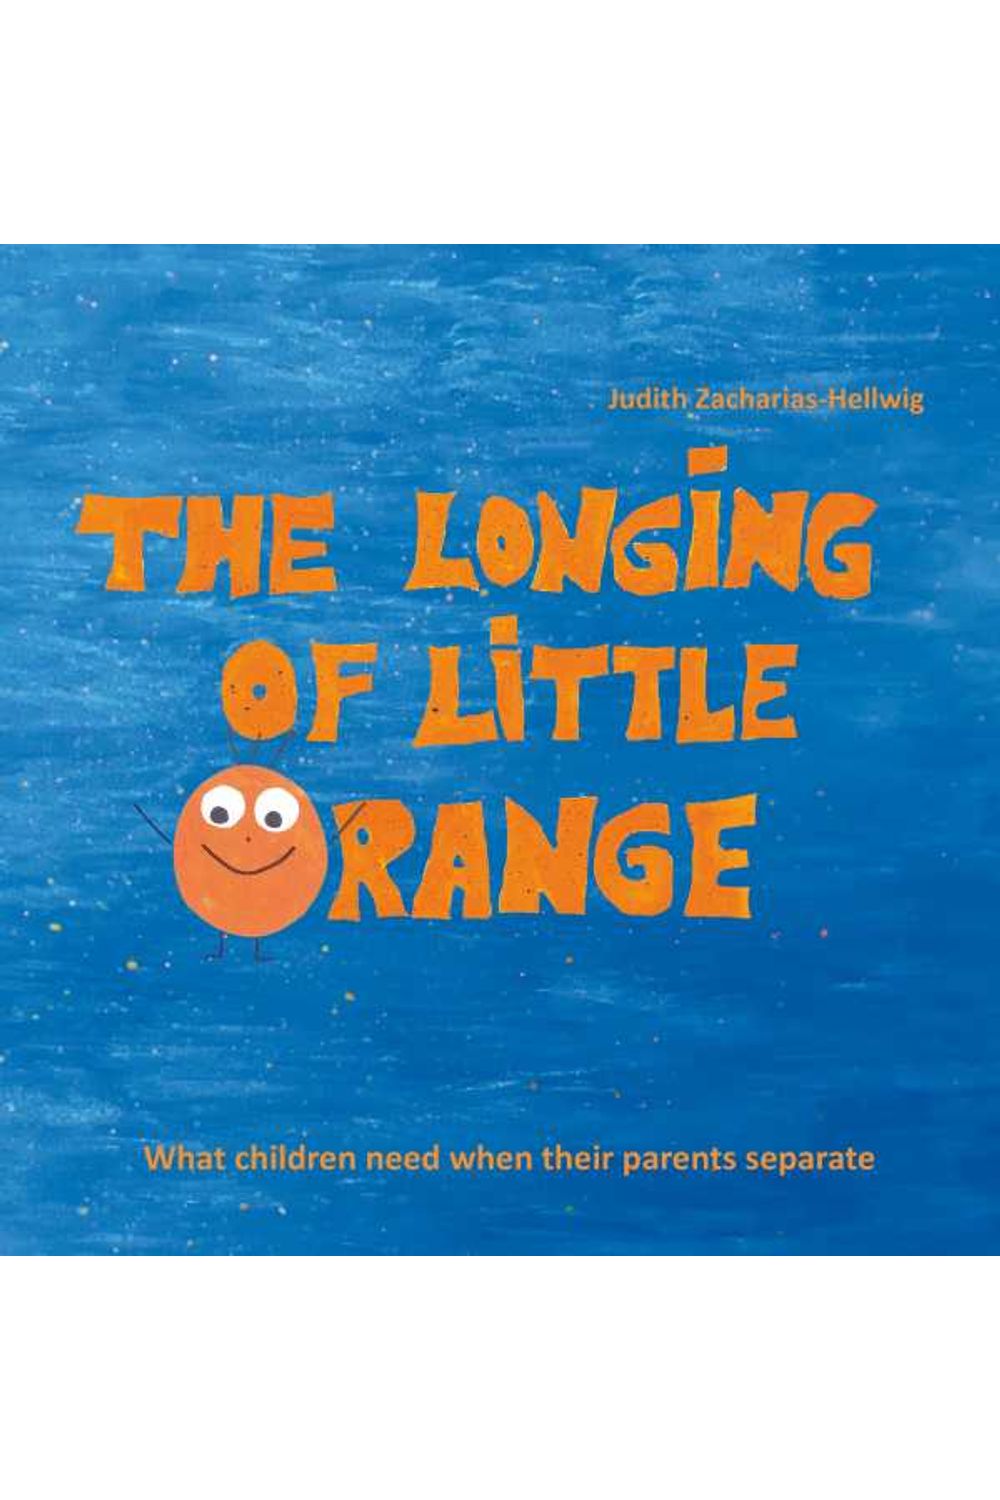 bw-the-longing-of-little-orange-papierfresserchens-mtmverlag-9783861969747